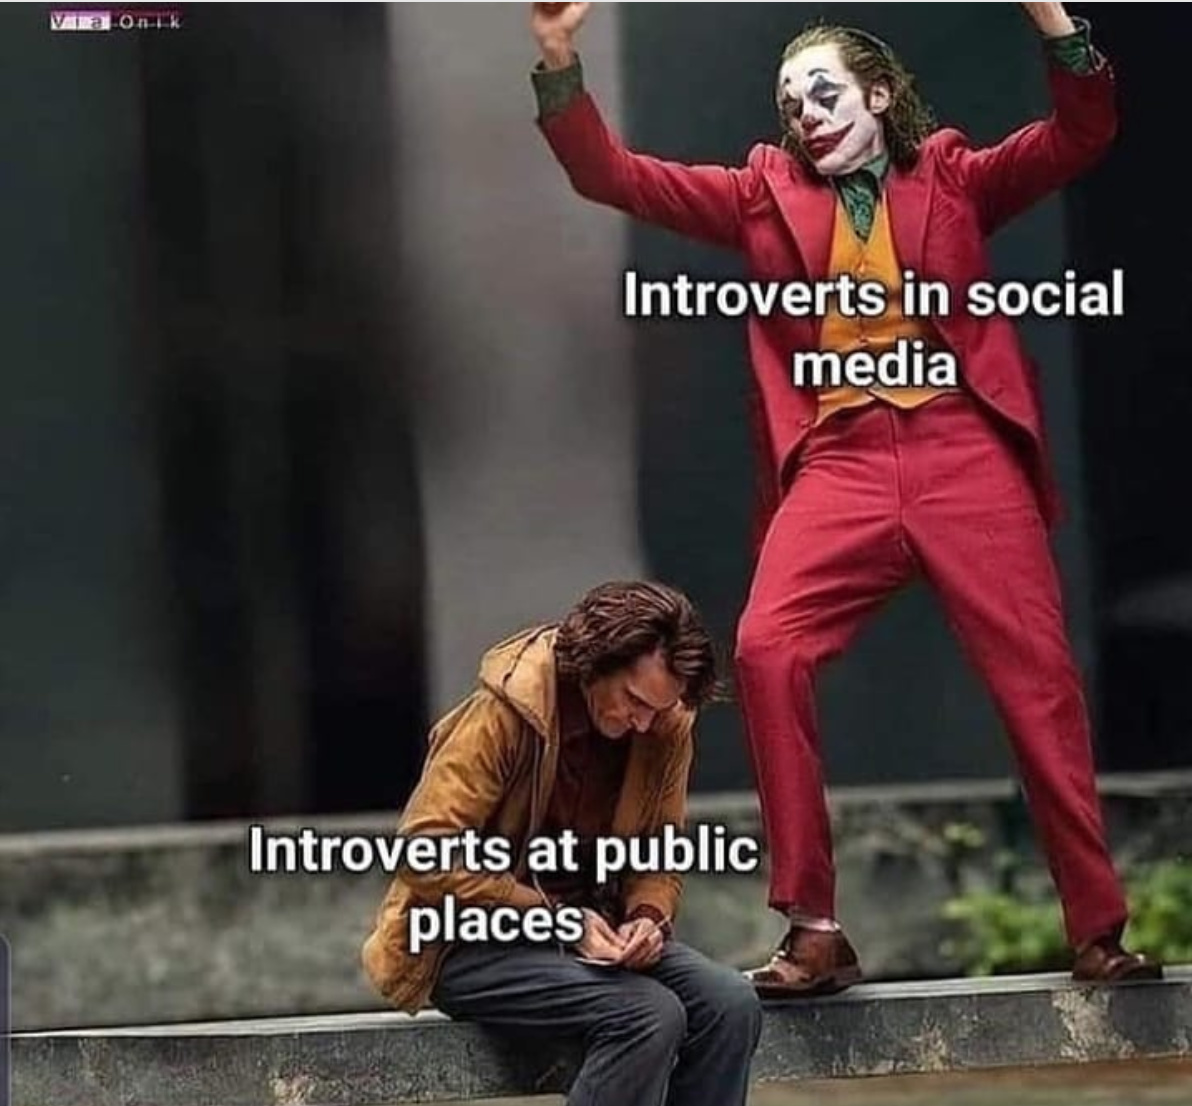 Introverts - meme